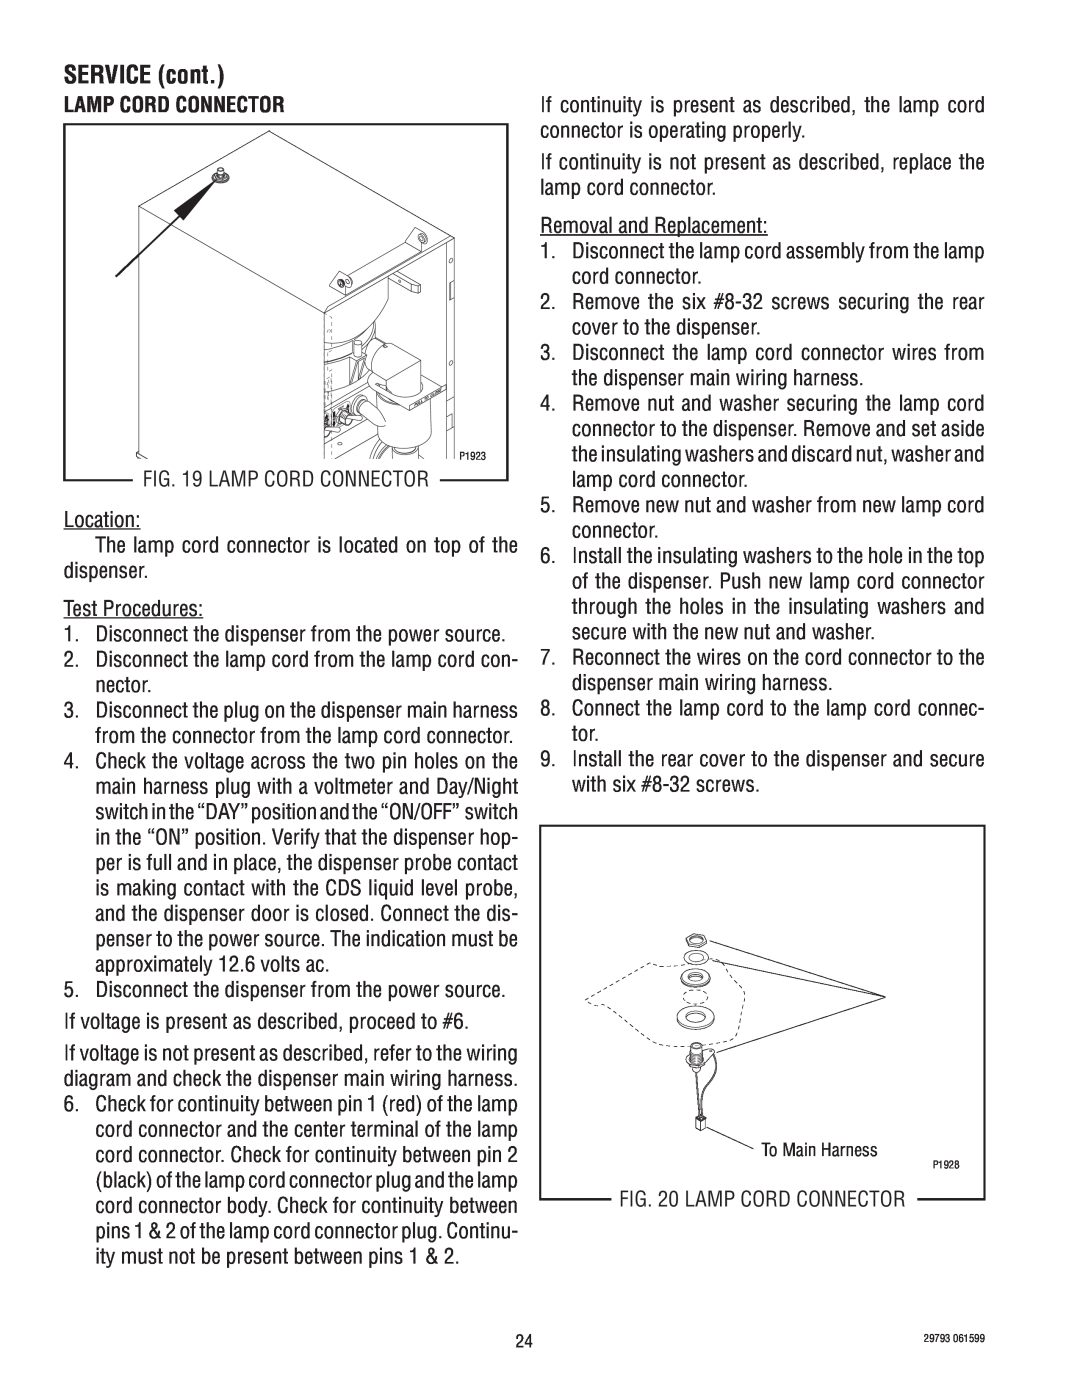 Bunn CDS-3 manual Lamp Cord Connector, SERVICE cont 